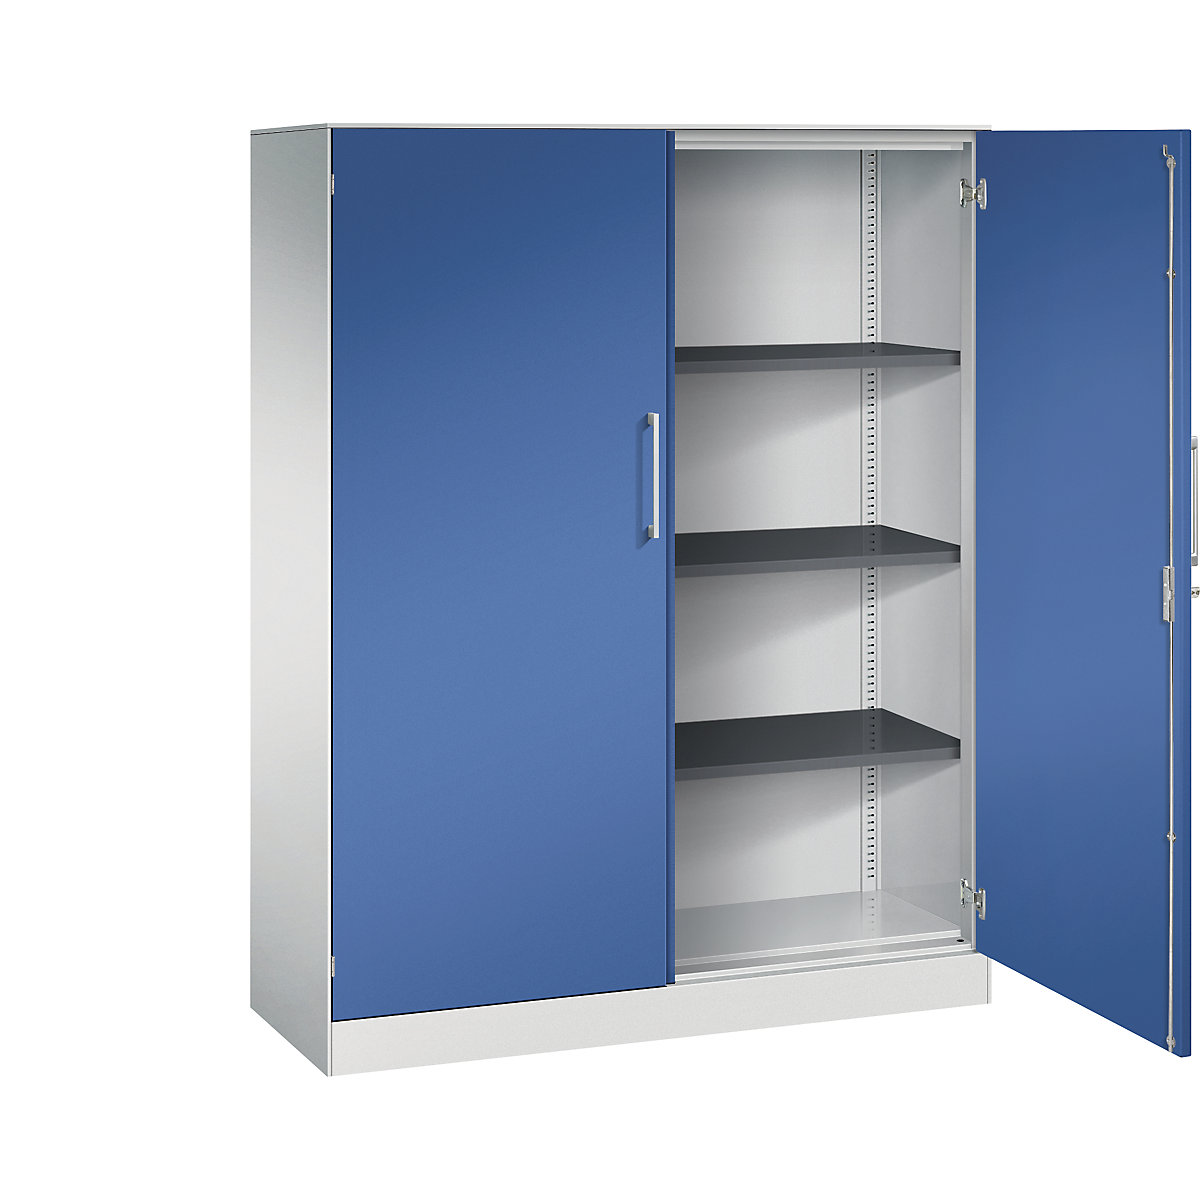 C+P – Skříň s otočnými dveřmi ASISTO, výška 1617 mm, šířka 1200 mm, 3 police, světlá šedá/enciánová modrá